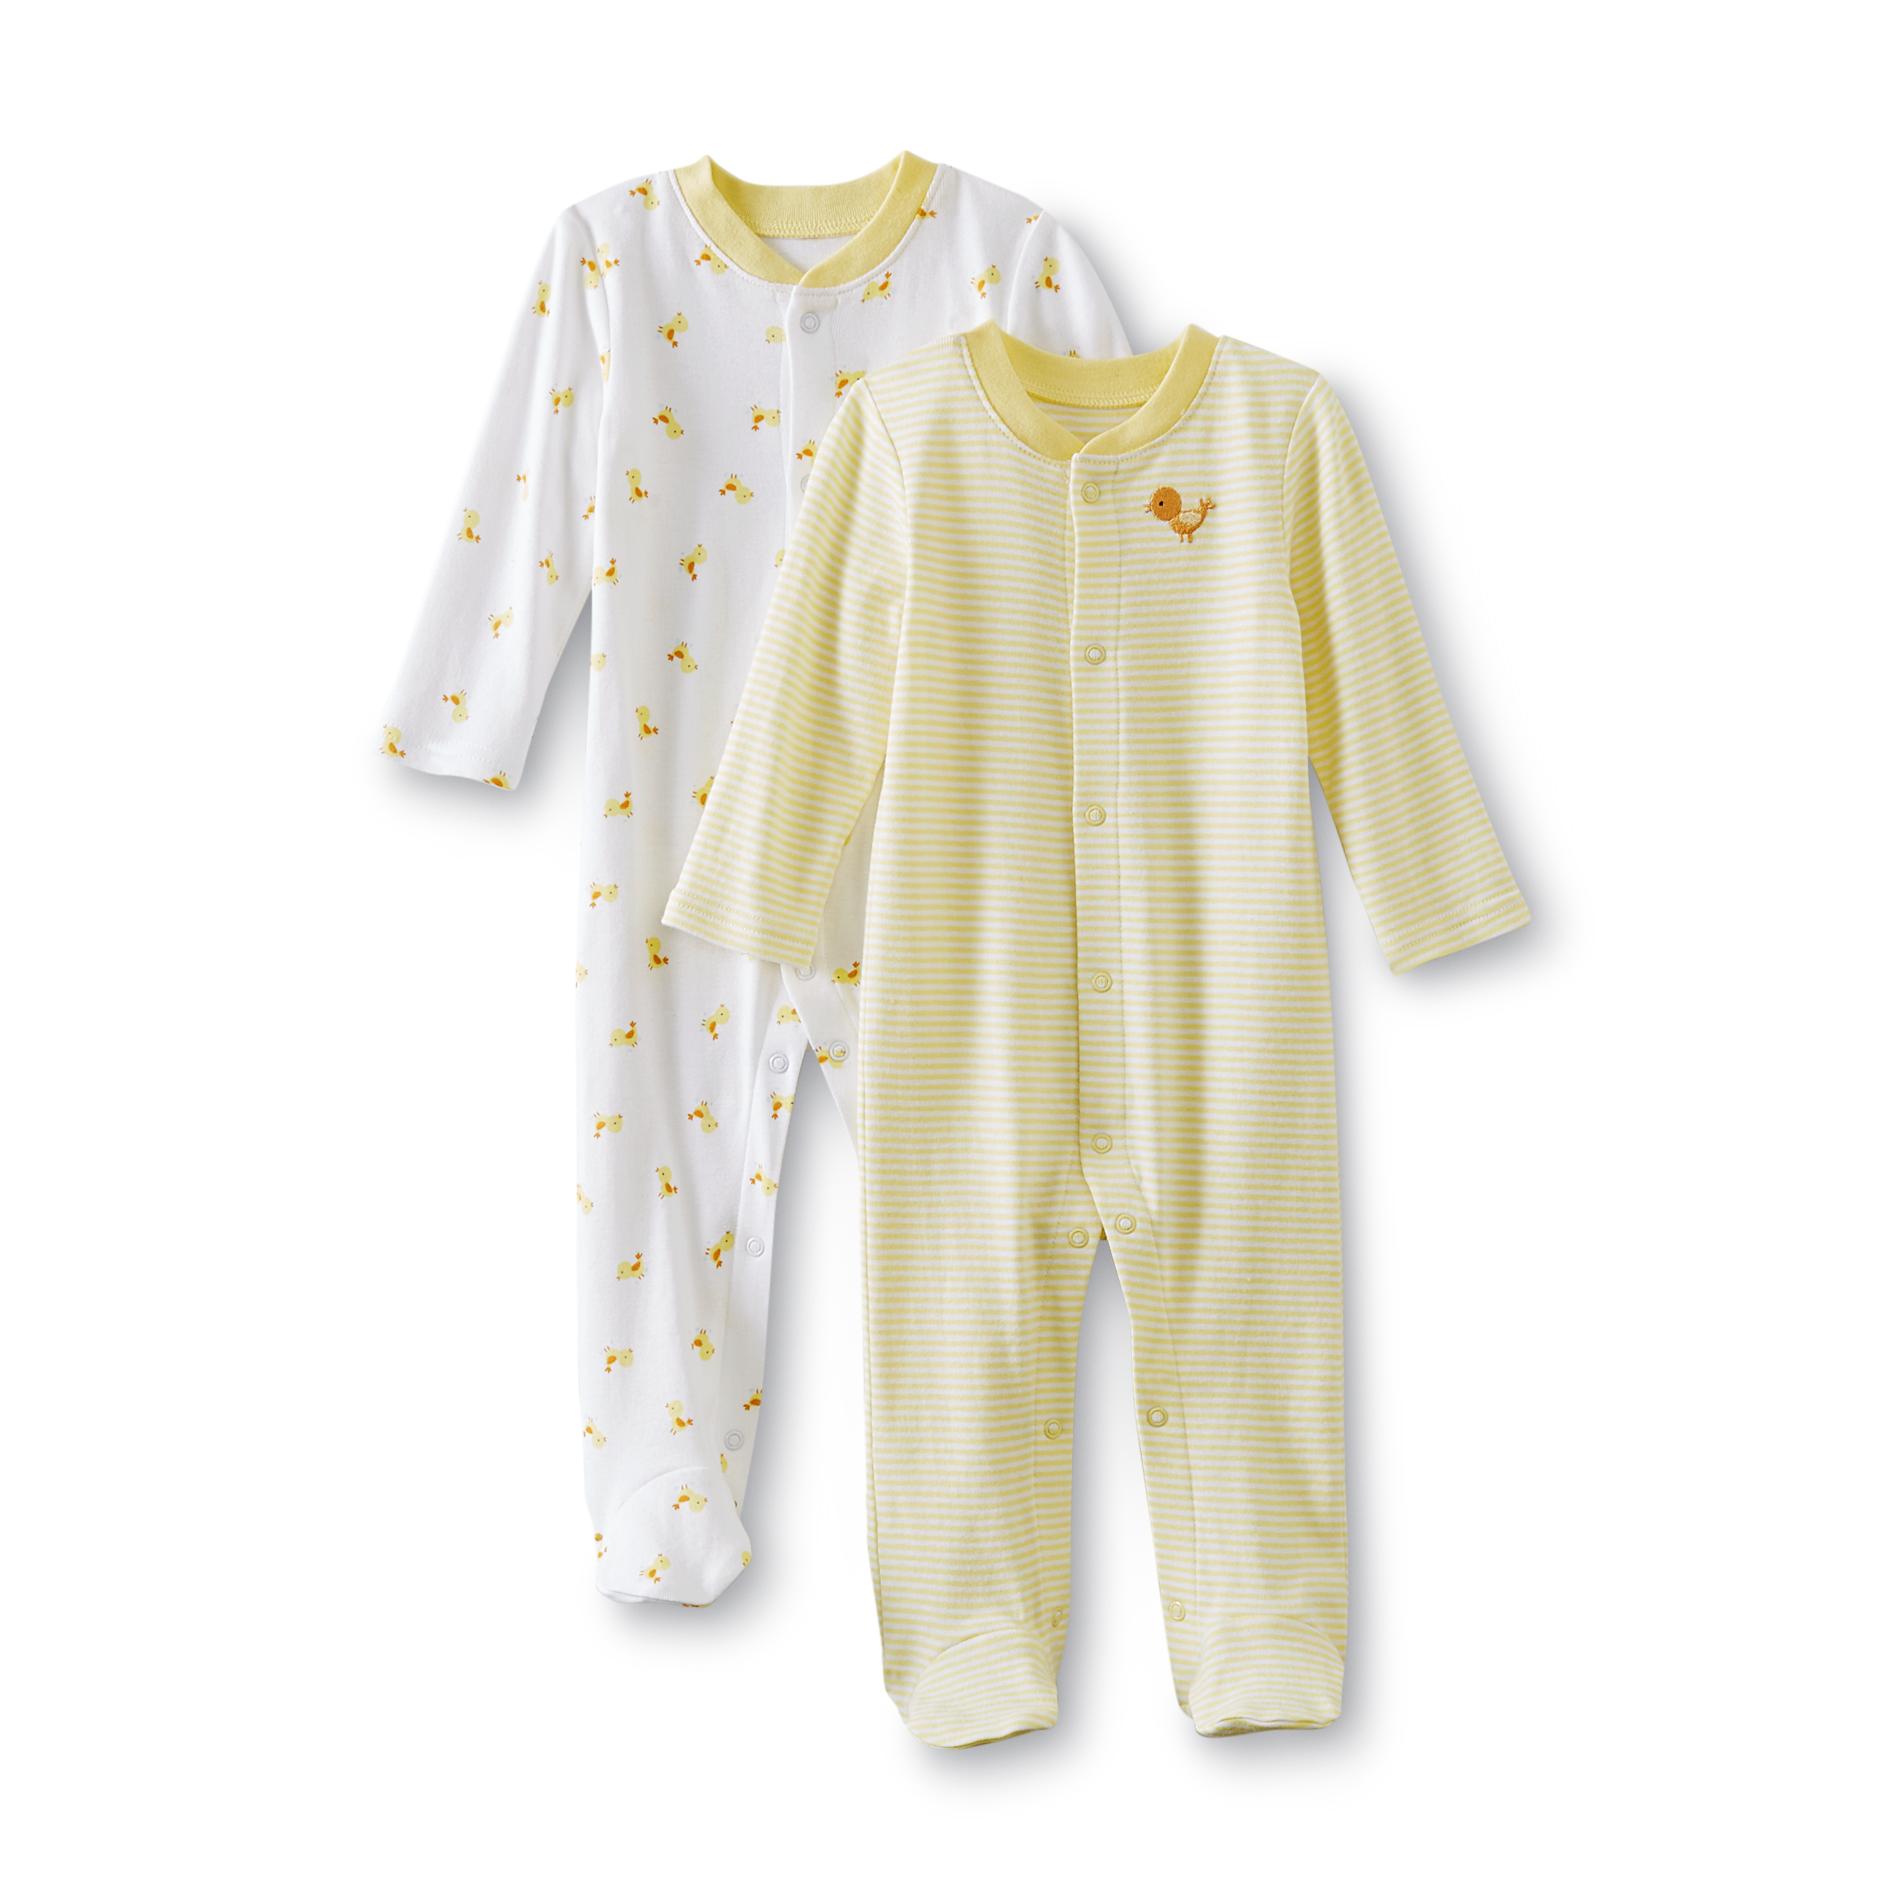 Small Wonders Newborn's 2-Pack Footed Sleeper Pajamas - Bird